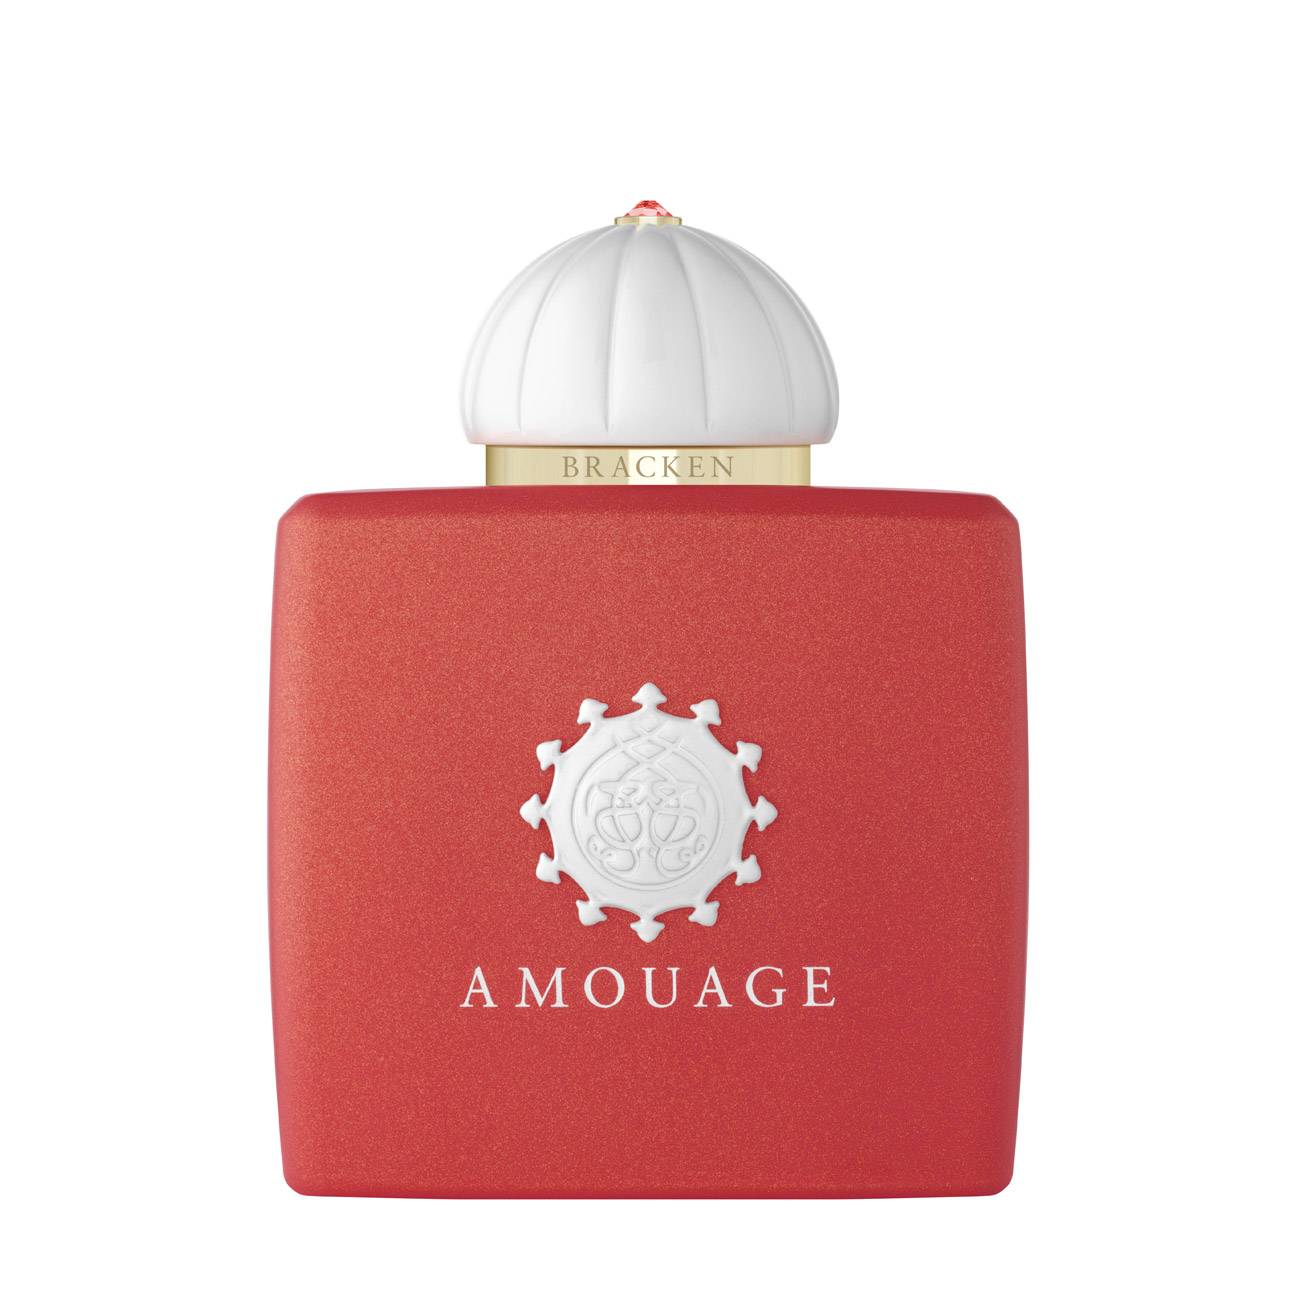 Parfum de niche Amouage BRACKEN 100ml cu comanda online